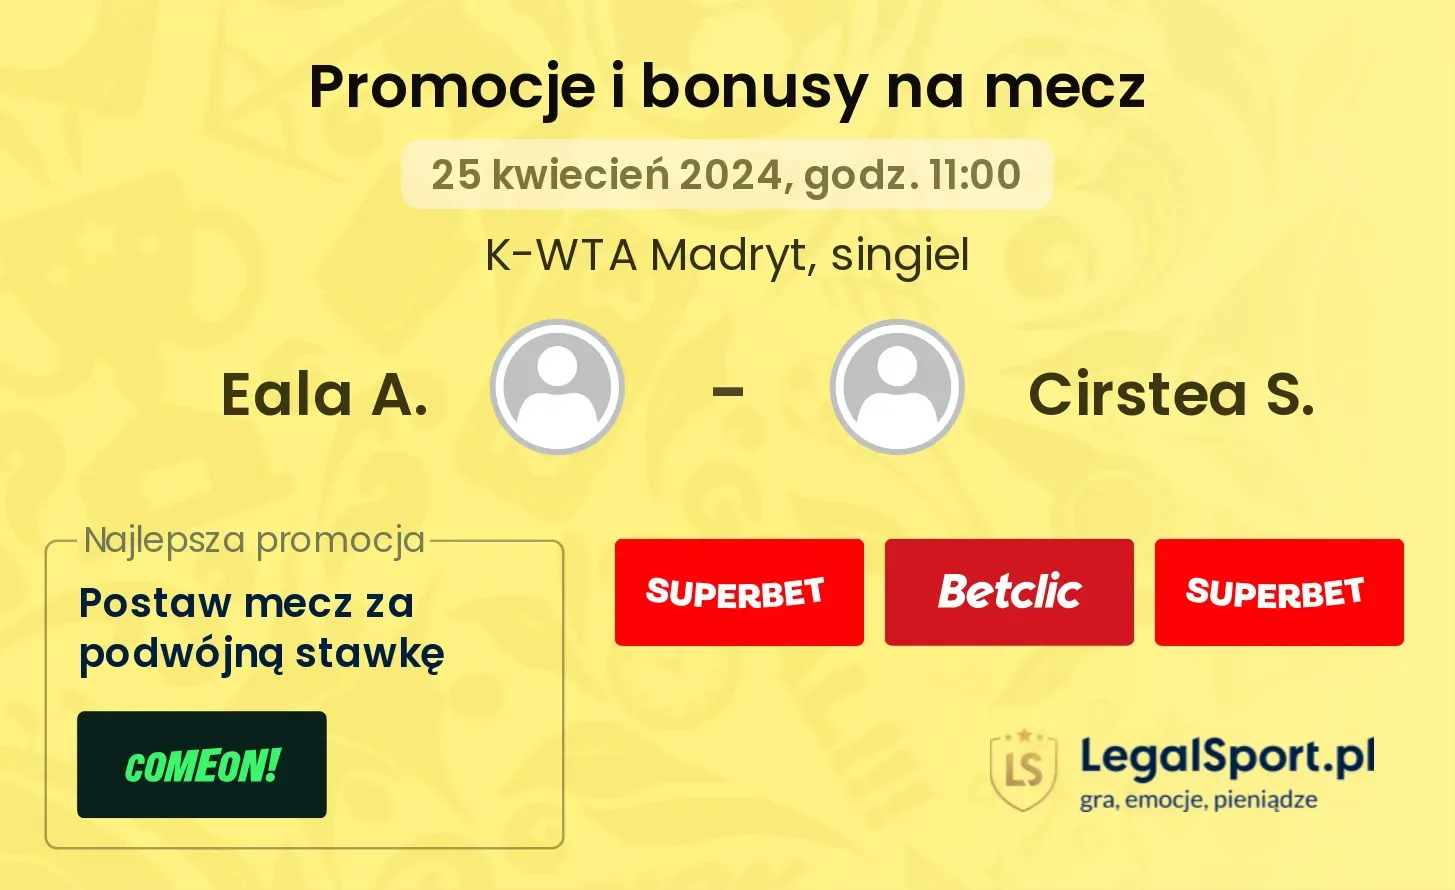 Eala A. - Cirstea S. promocje bonusy na mecz